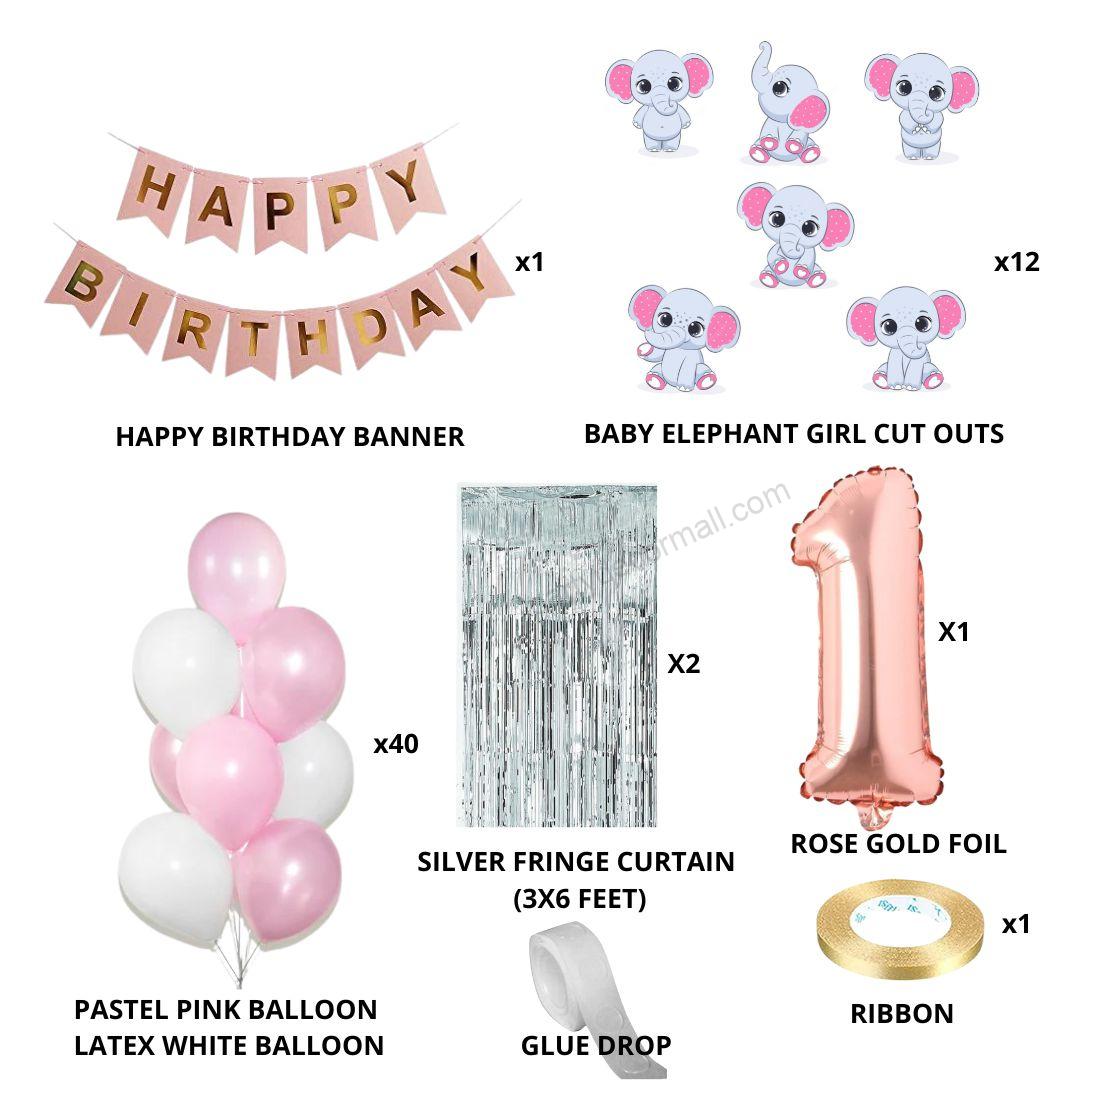 Baby Elephant Girl Theme Balloon with Number Foil Decor DIY Kit (58 Pcs)